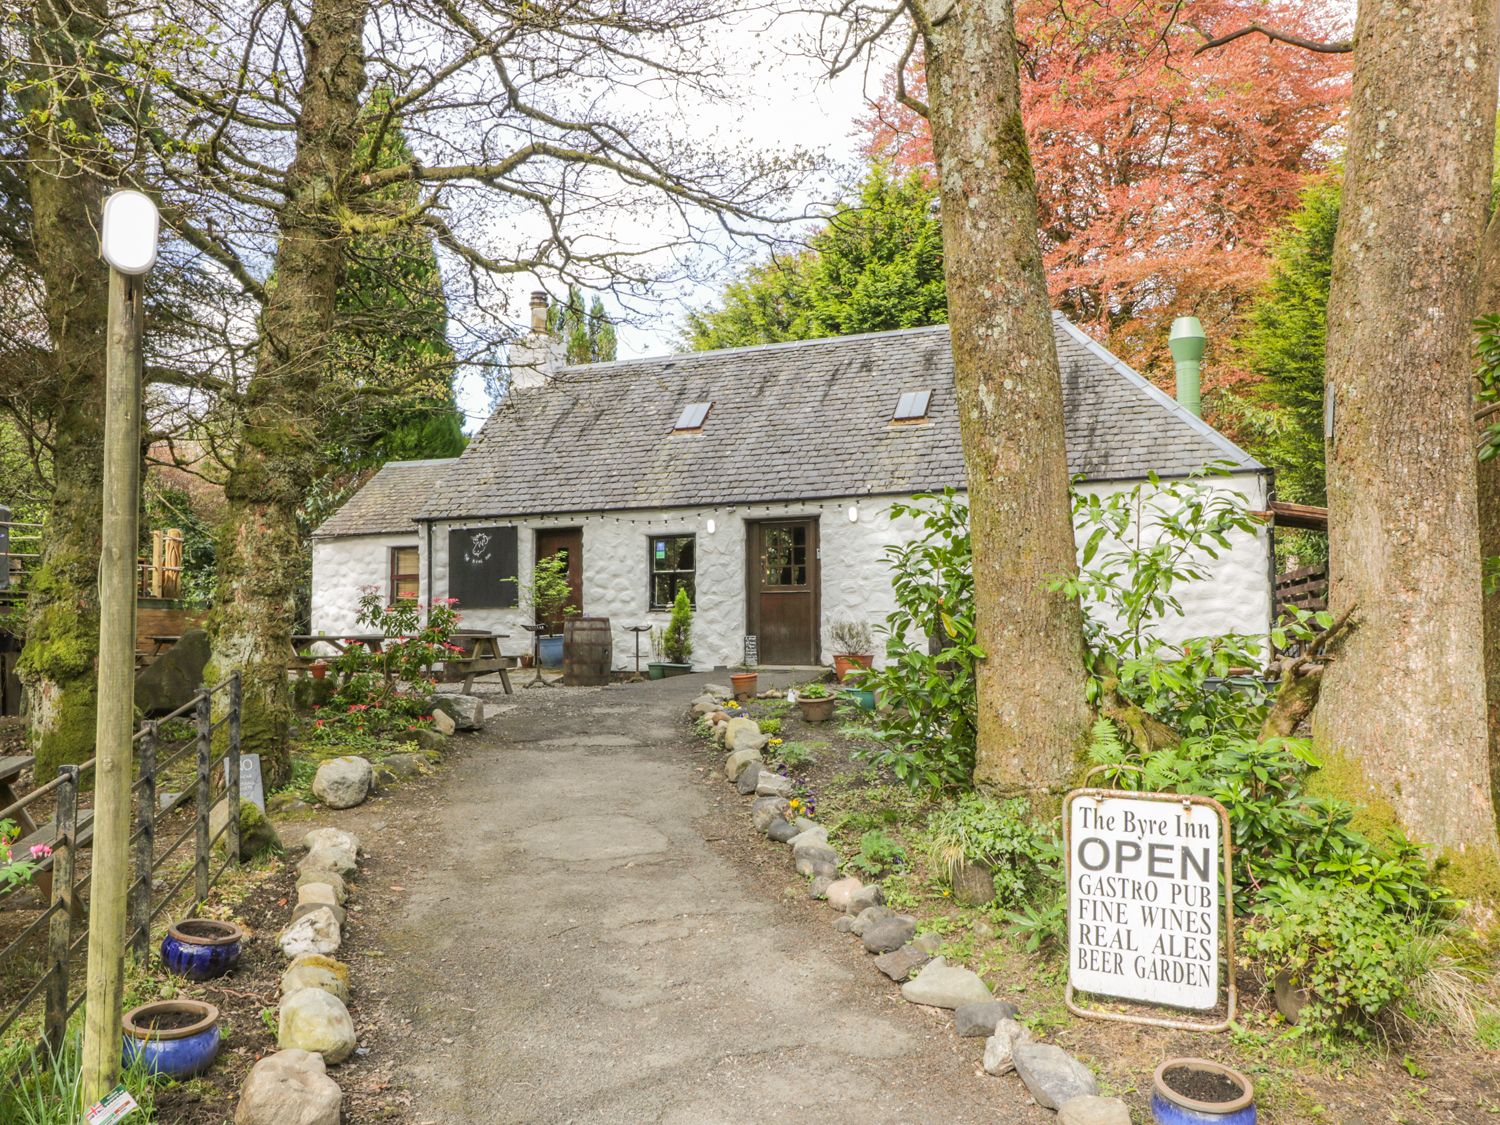 Fois House, Loch Lomond & Trossachs 